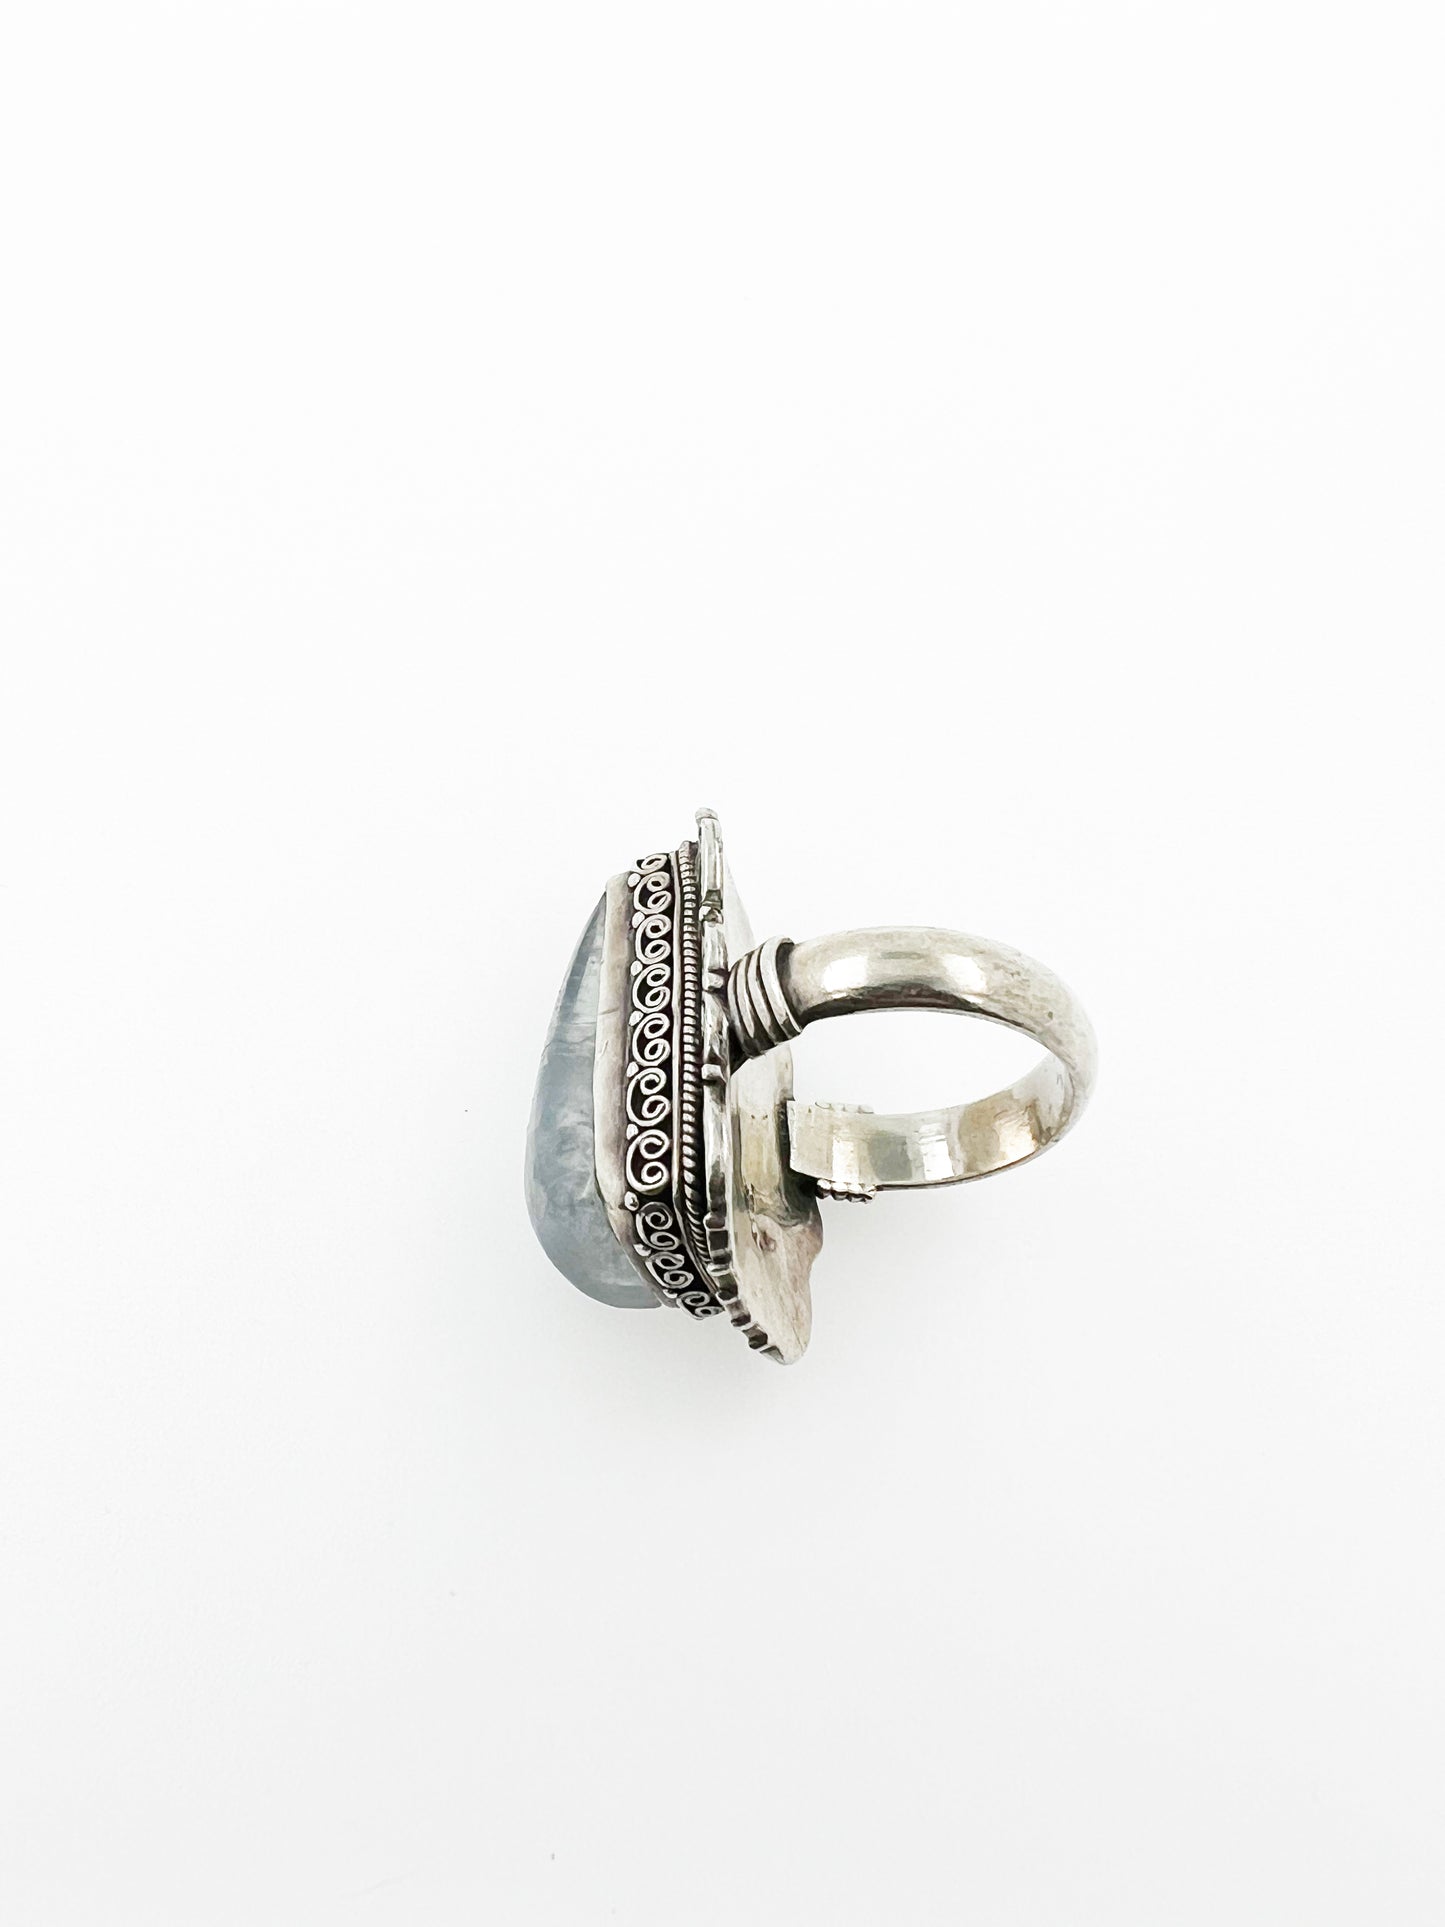 Vivid Blue Oblong Moonstone Cabochon Ring in .925 Silver